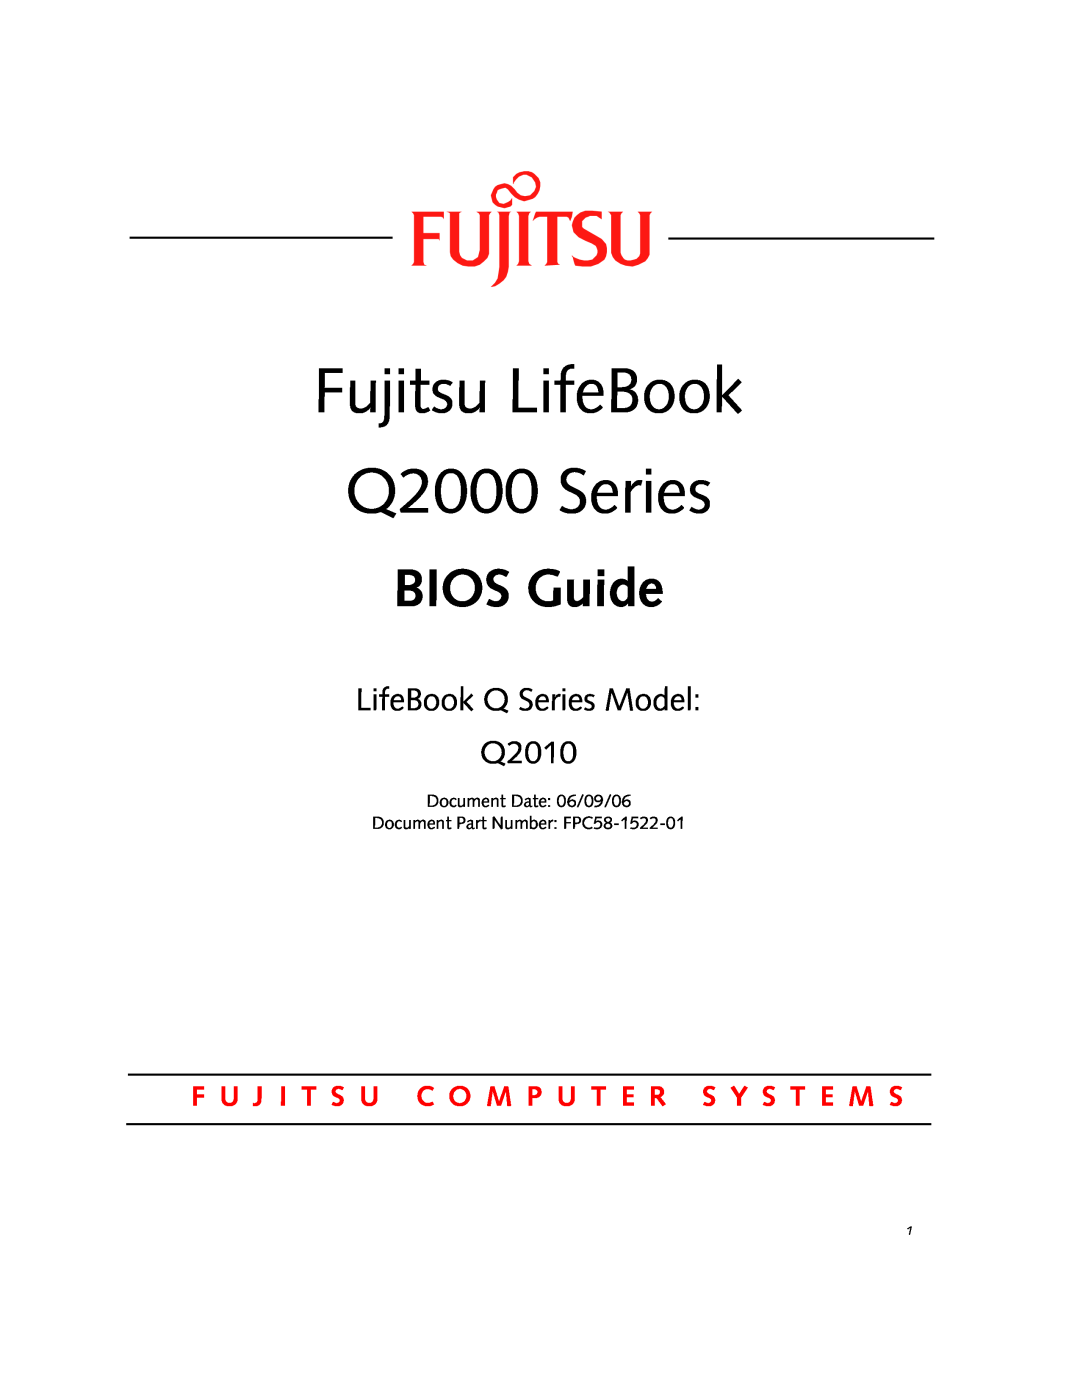 Fujitsu manual Fujitsu LifeBook Q2000 Series, BIOS Guide, LifeBook Q Series Model Q2010 